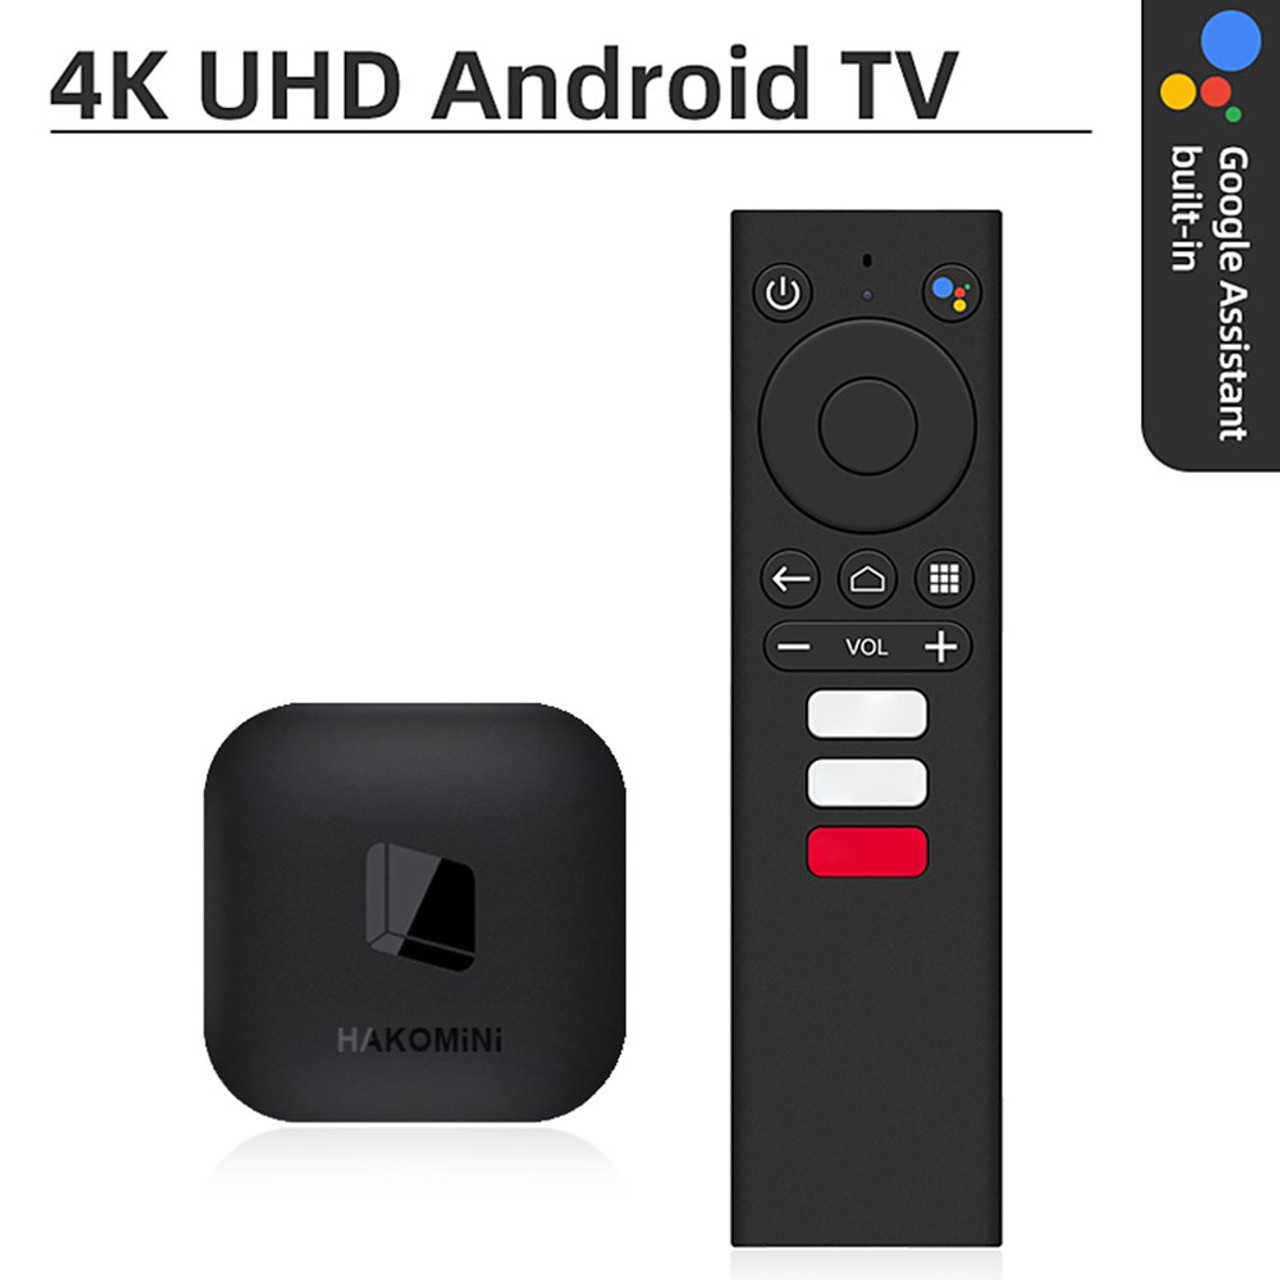 Smart TV Box – the Hako Mini Android TV box